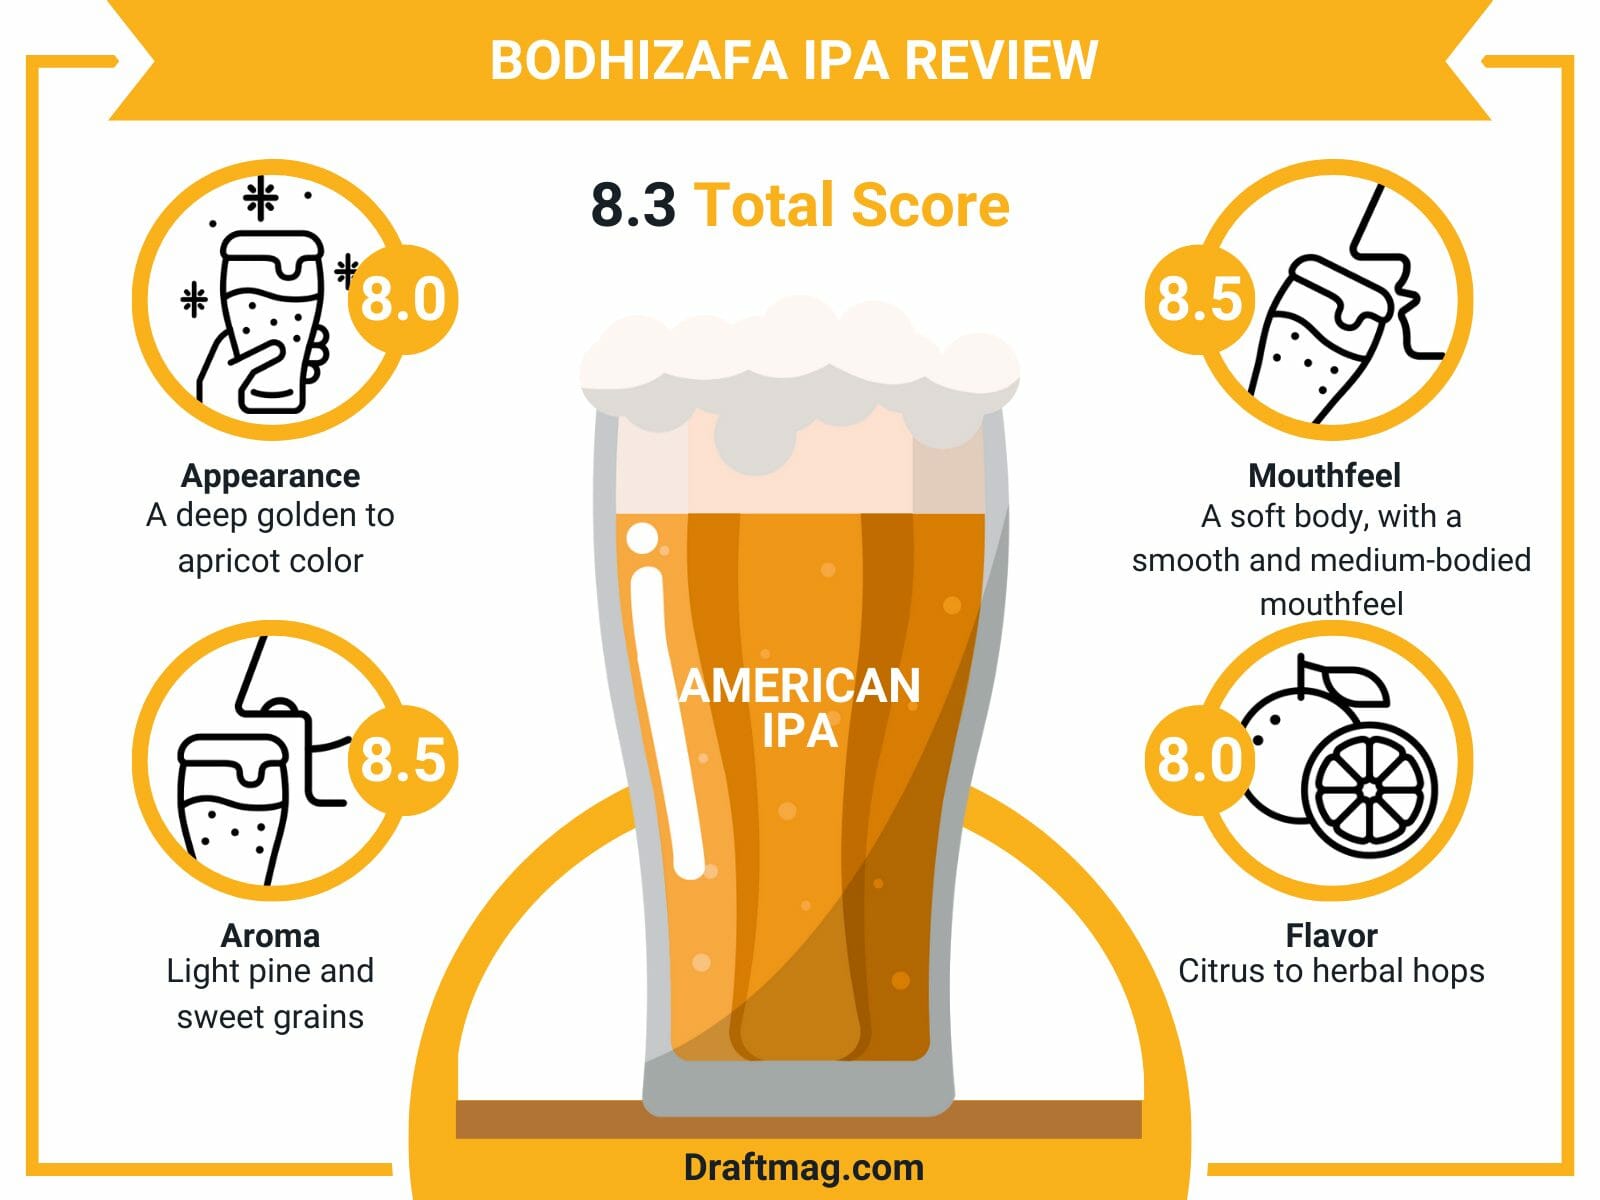 Bodhizafa ipa review infographic